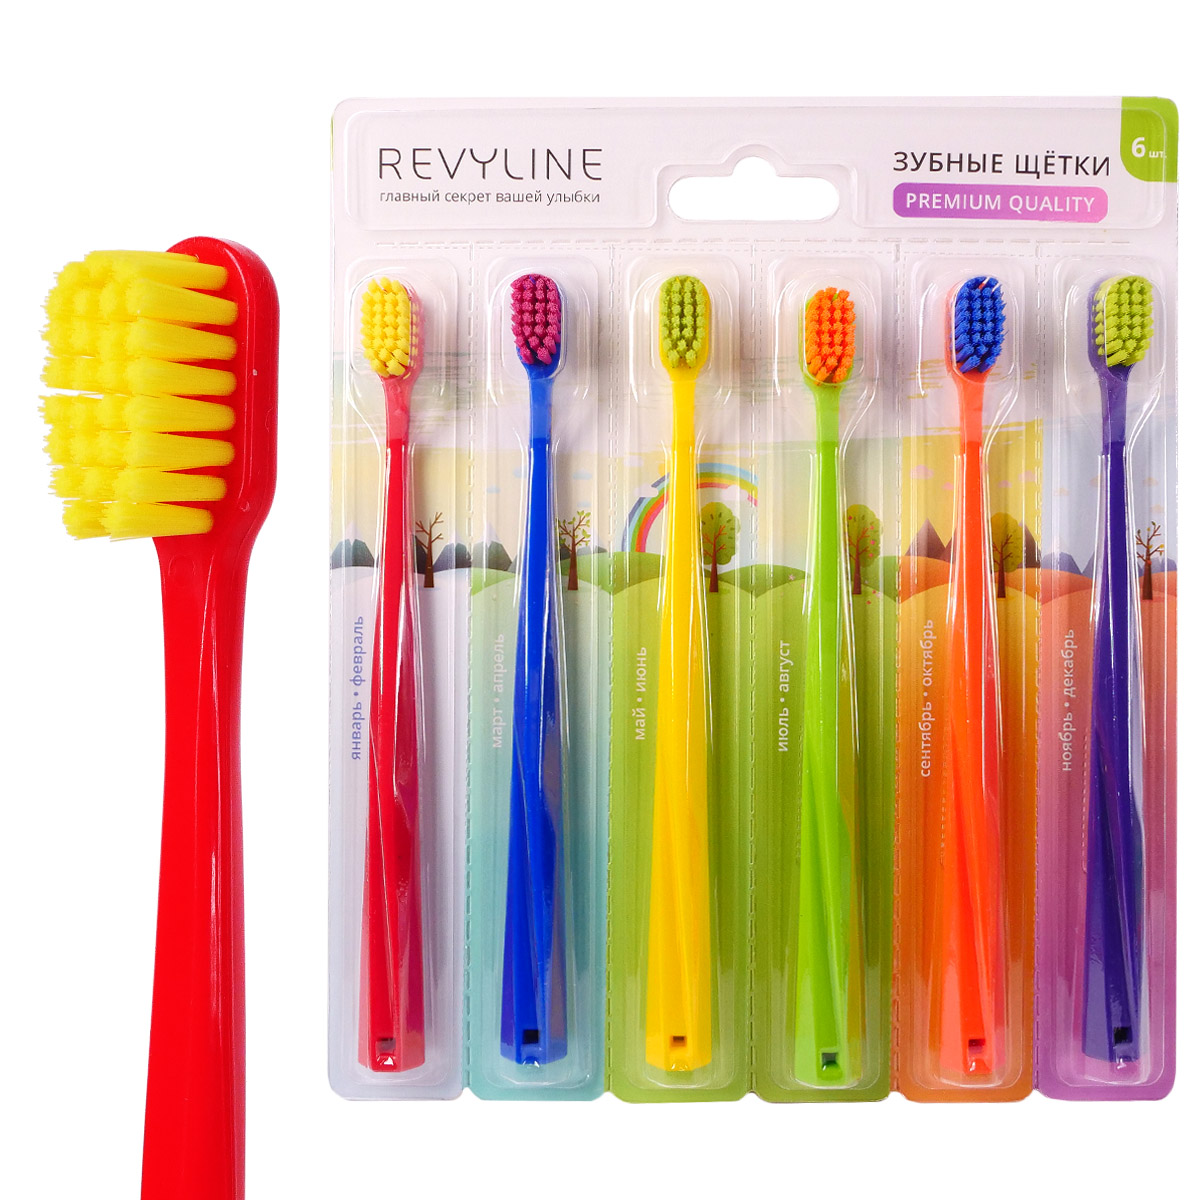 Набор зубных щеток Revyline revyline набор зубных щеток sm5000 6 шт